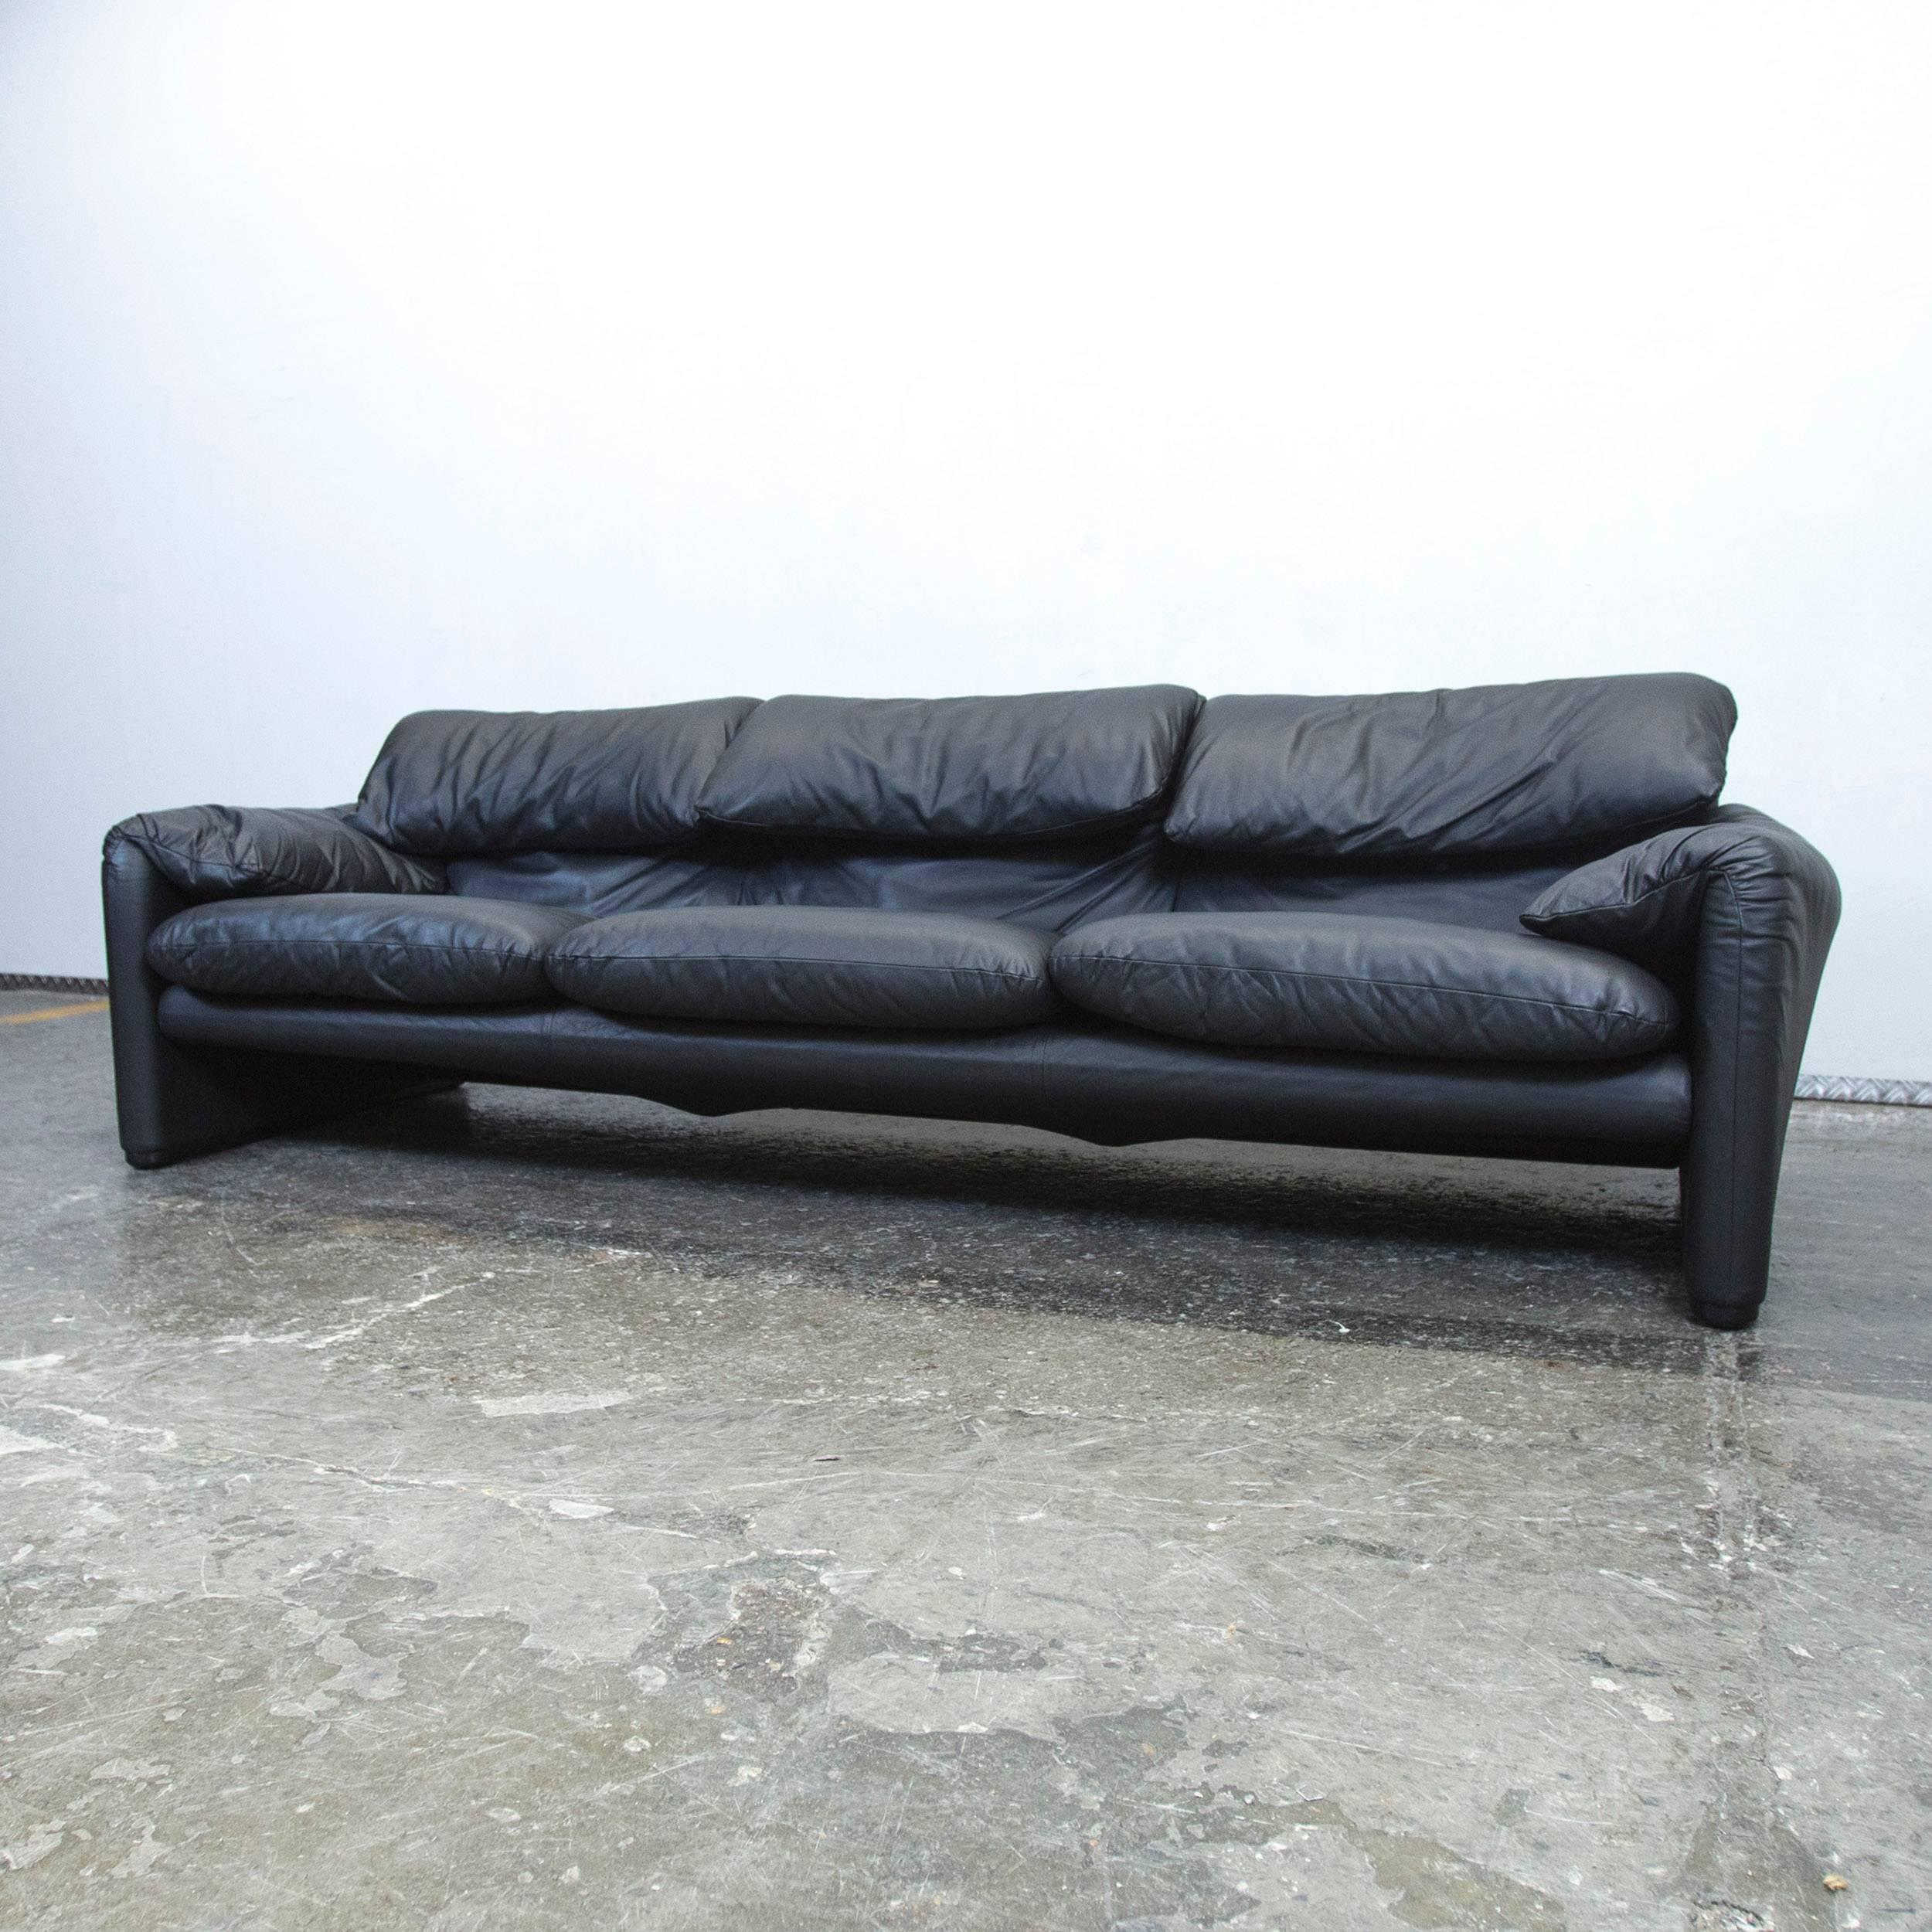 Contemporary Cassina Maralunga Designer Sofa Black Leather Three-Seat Couch Function Modern